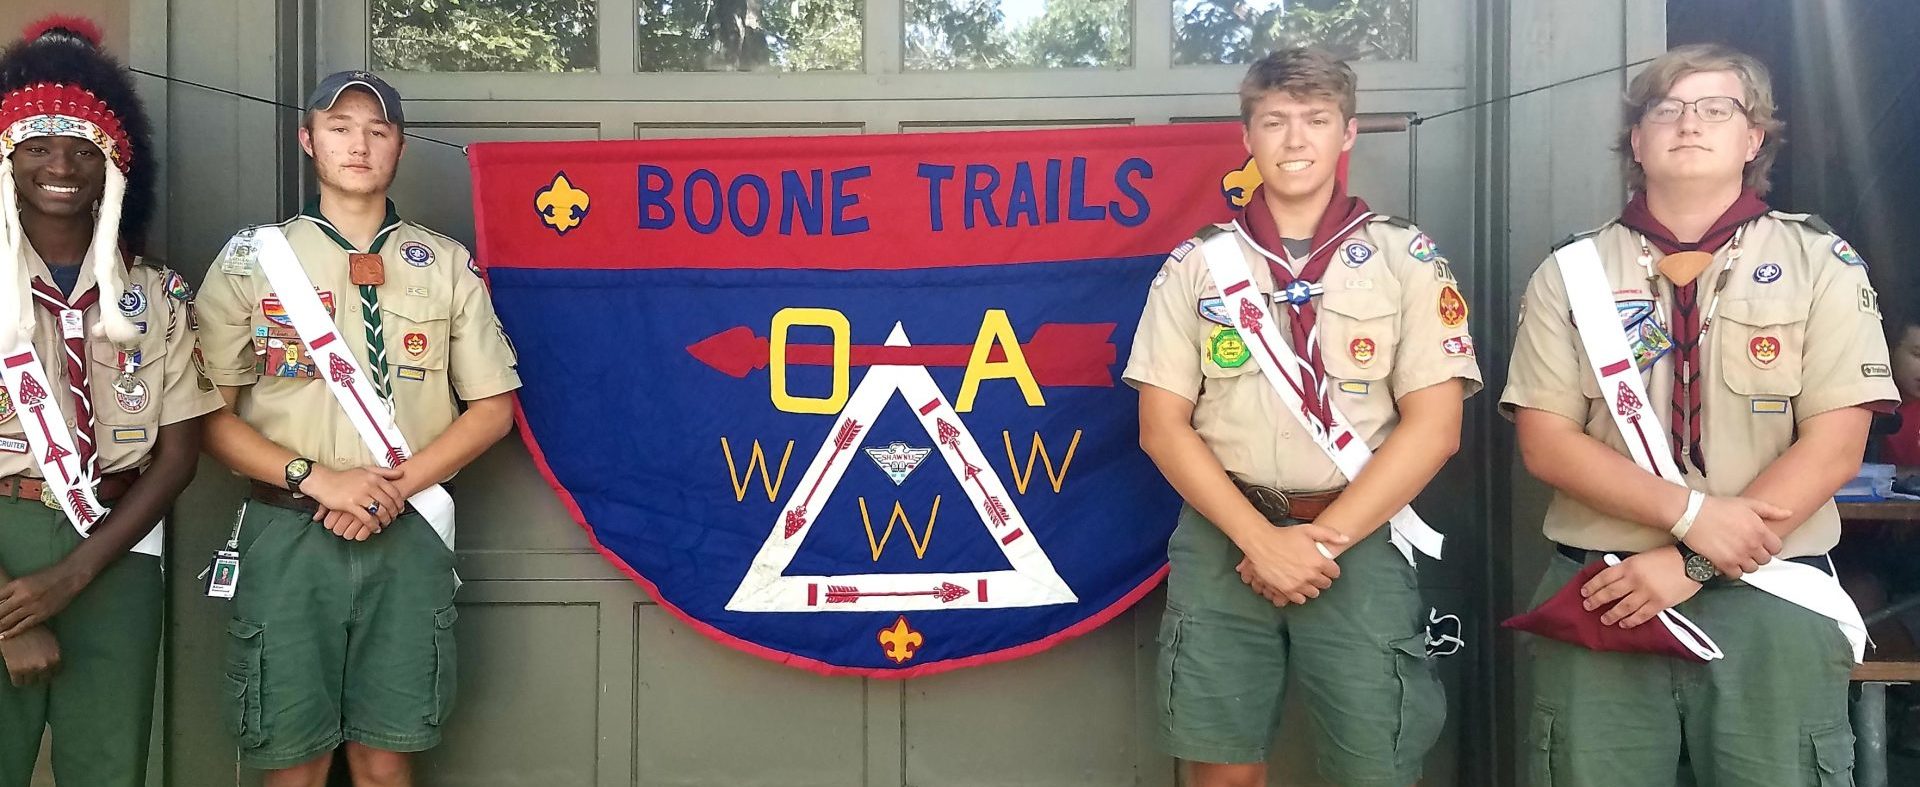 Boone Trails Scouts